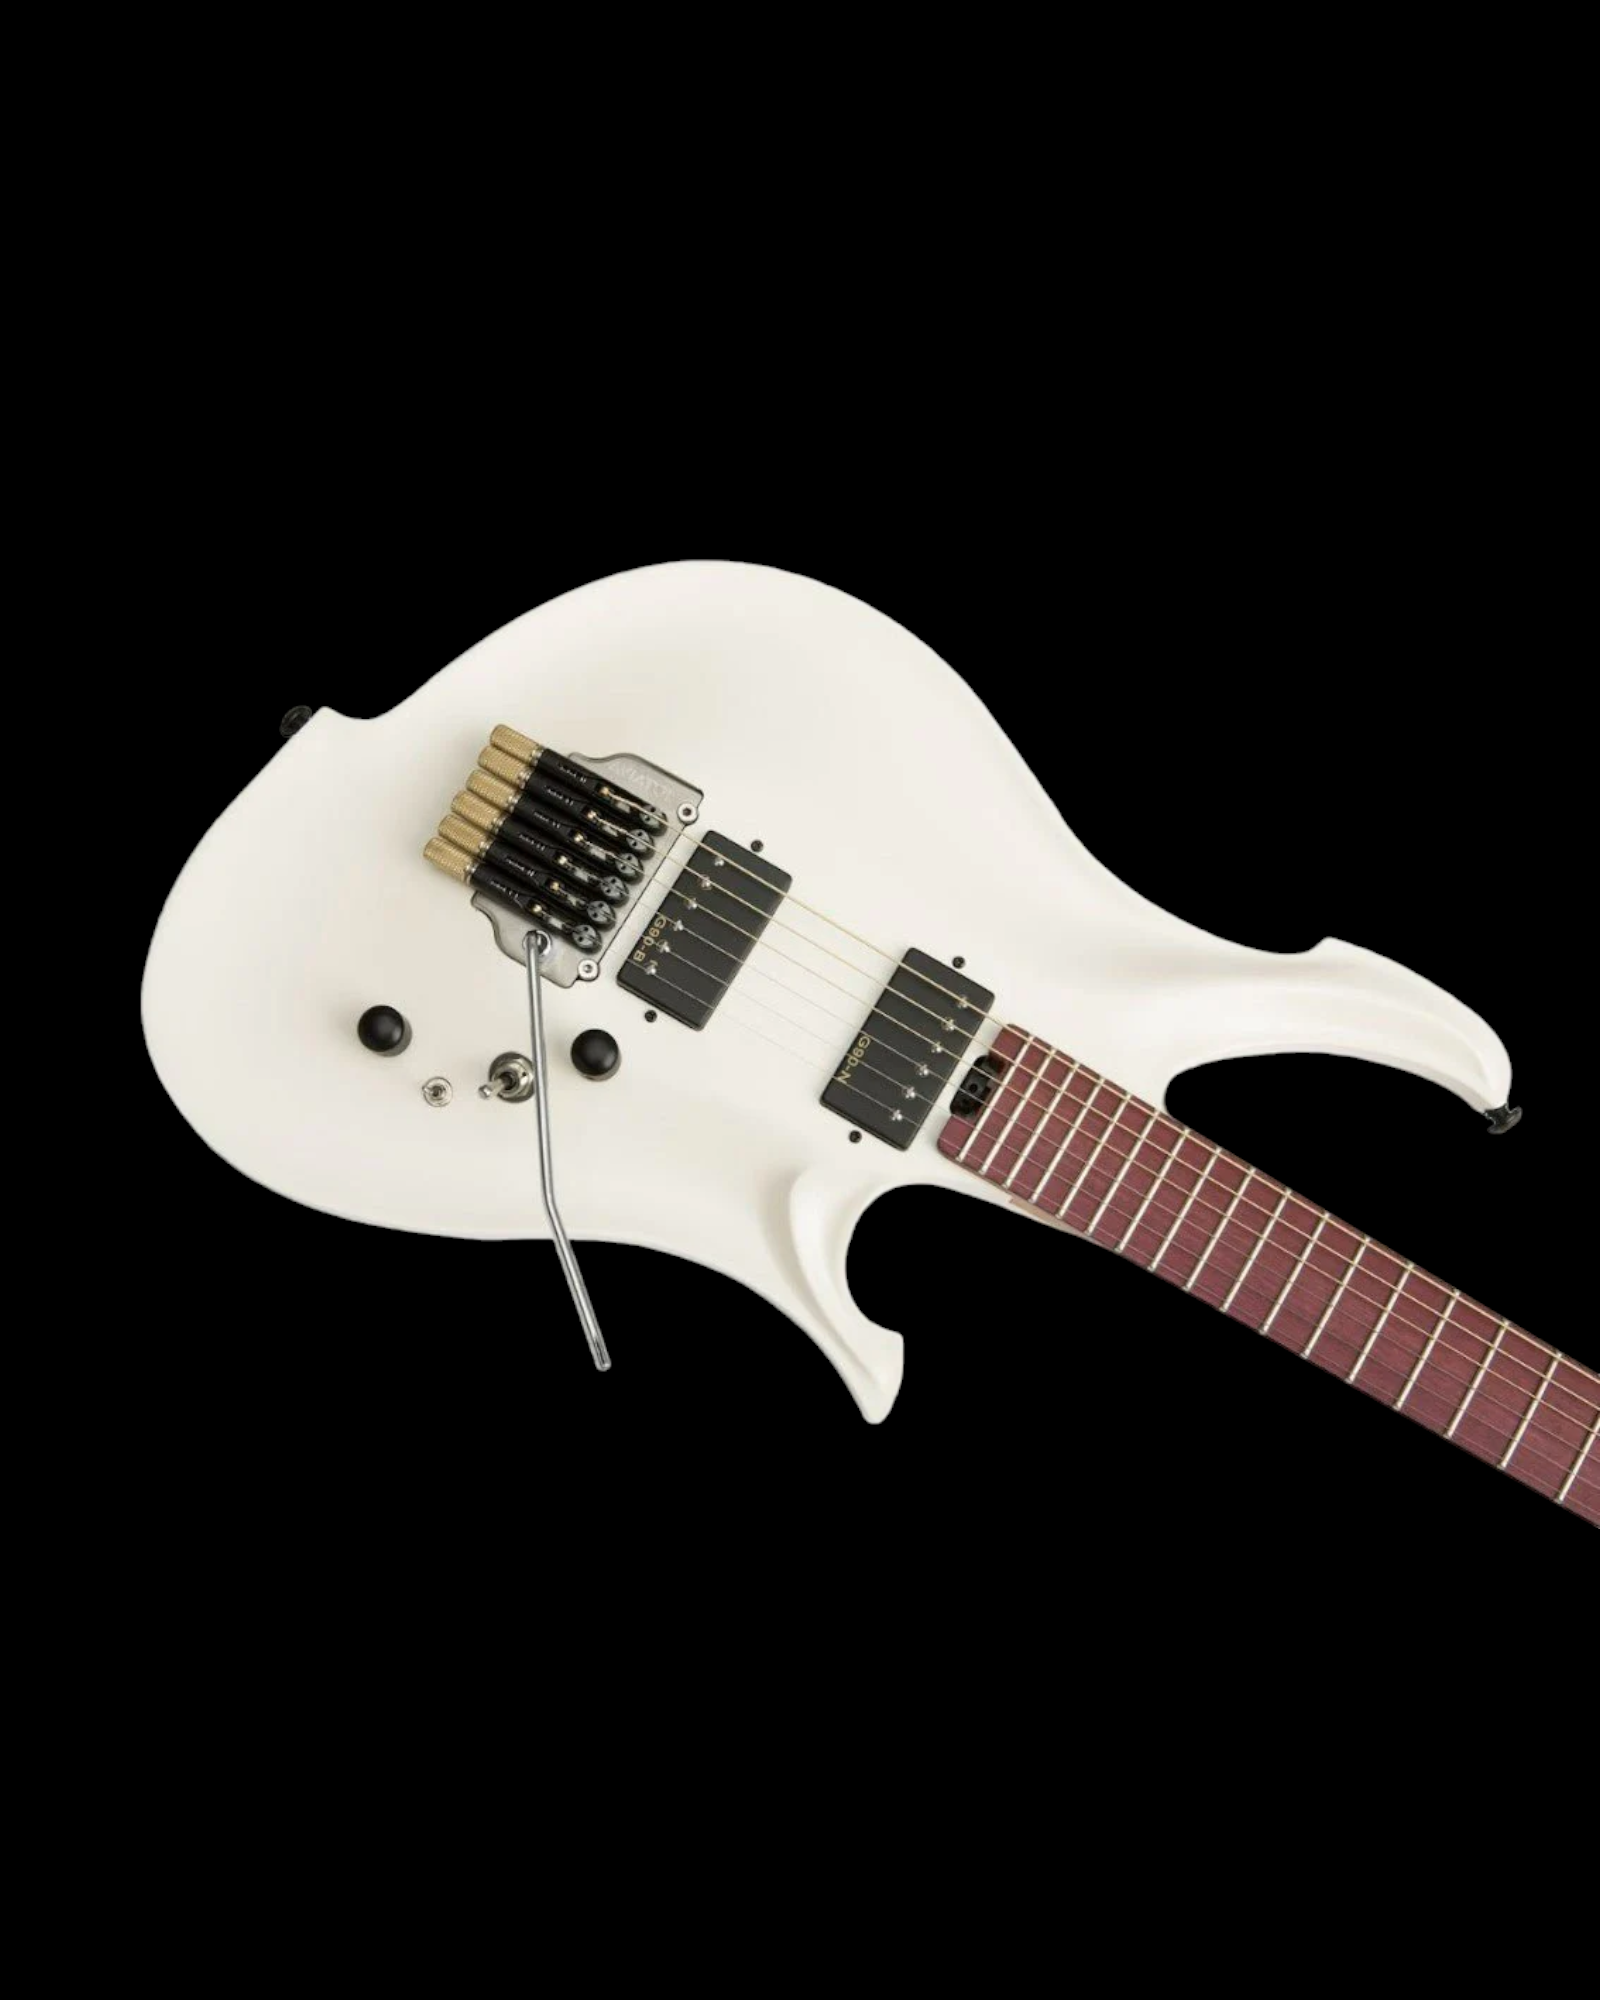 Koloss Headless Mahogany Neck Aluminium Body Koloss Electric Guitar - Black/Natural/White GT5HM